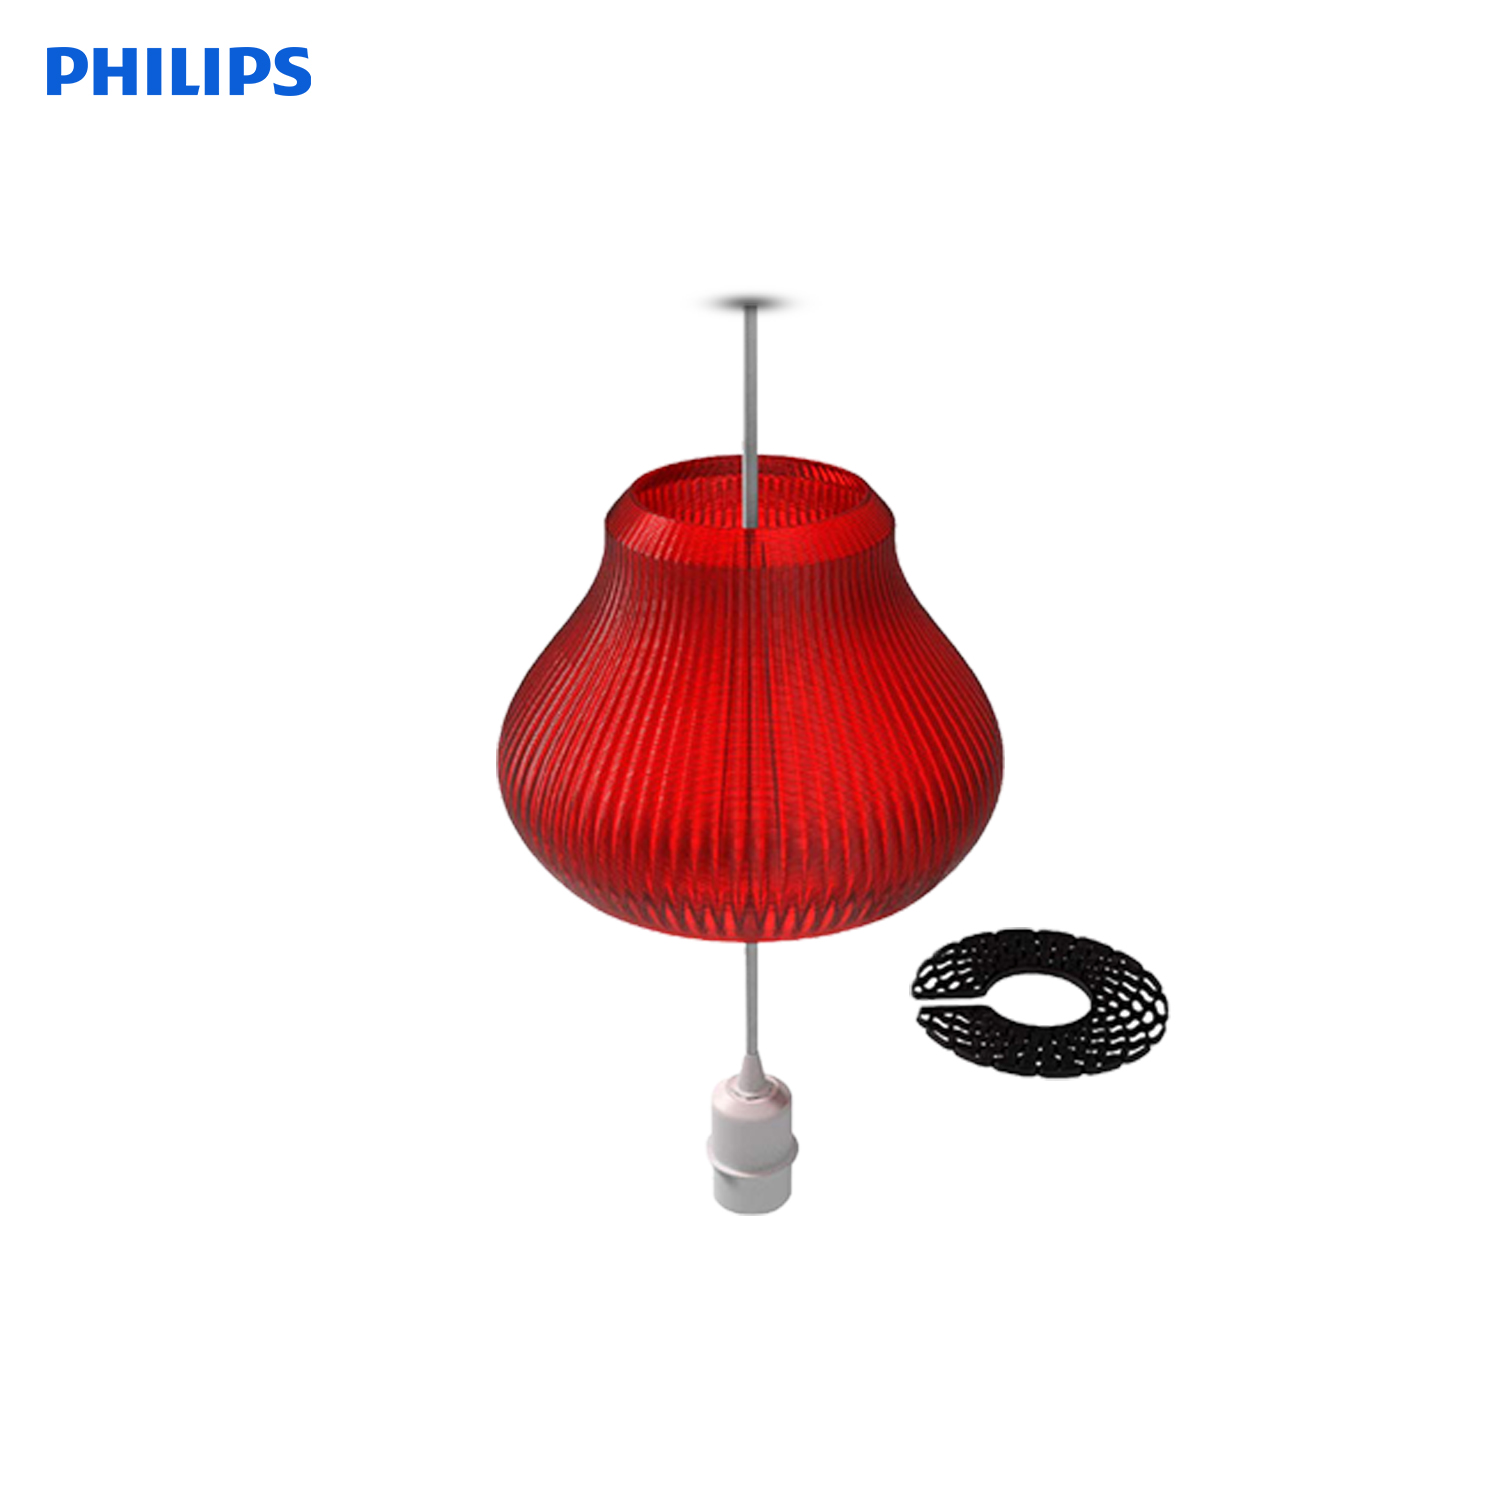 Philips Lampu Gantung 3D Printed Luminaire